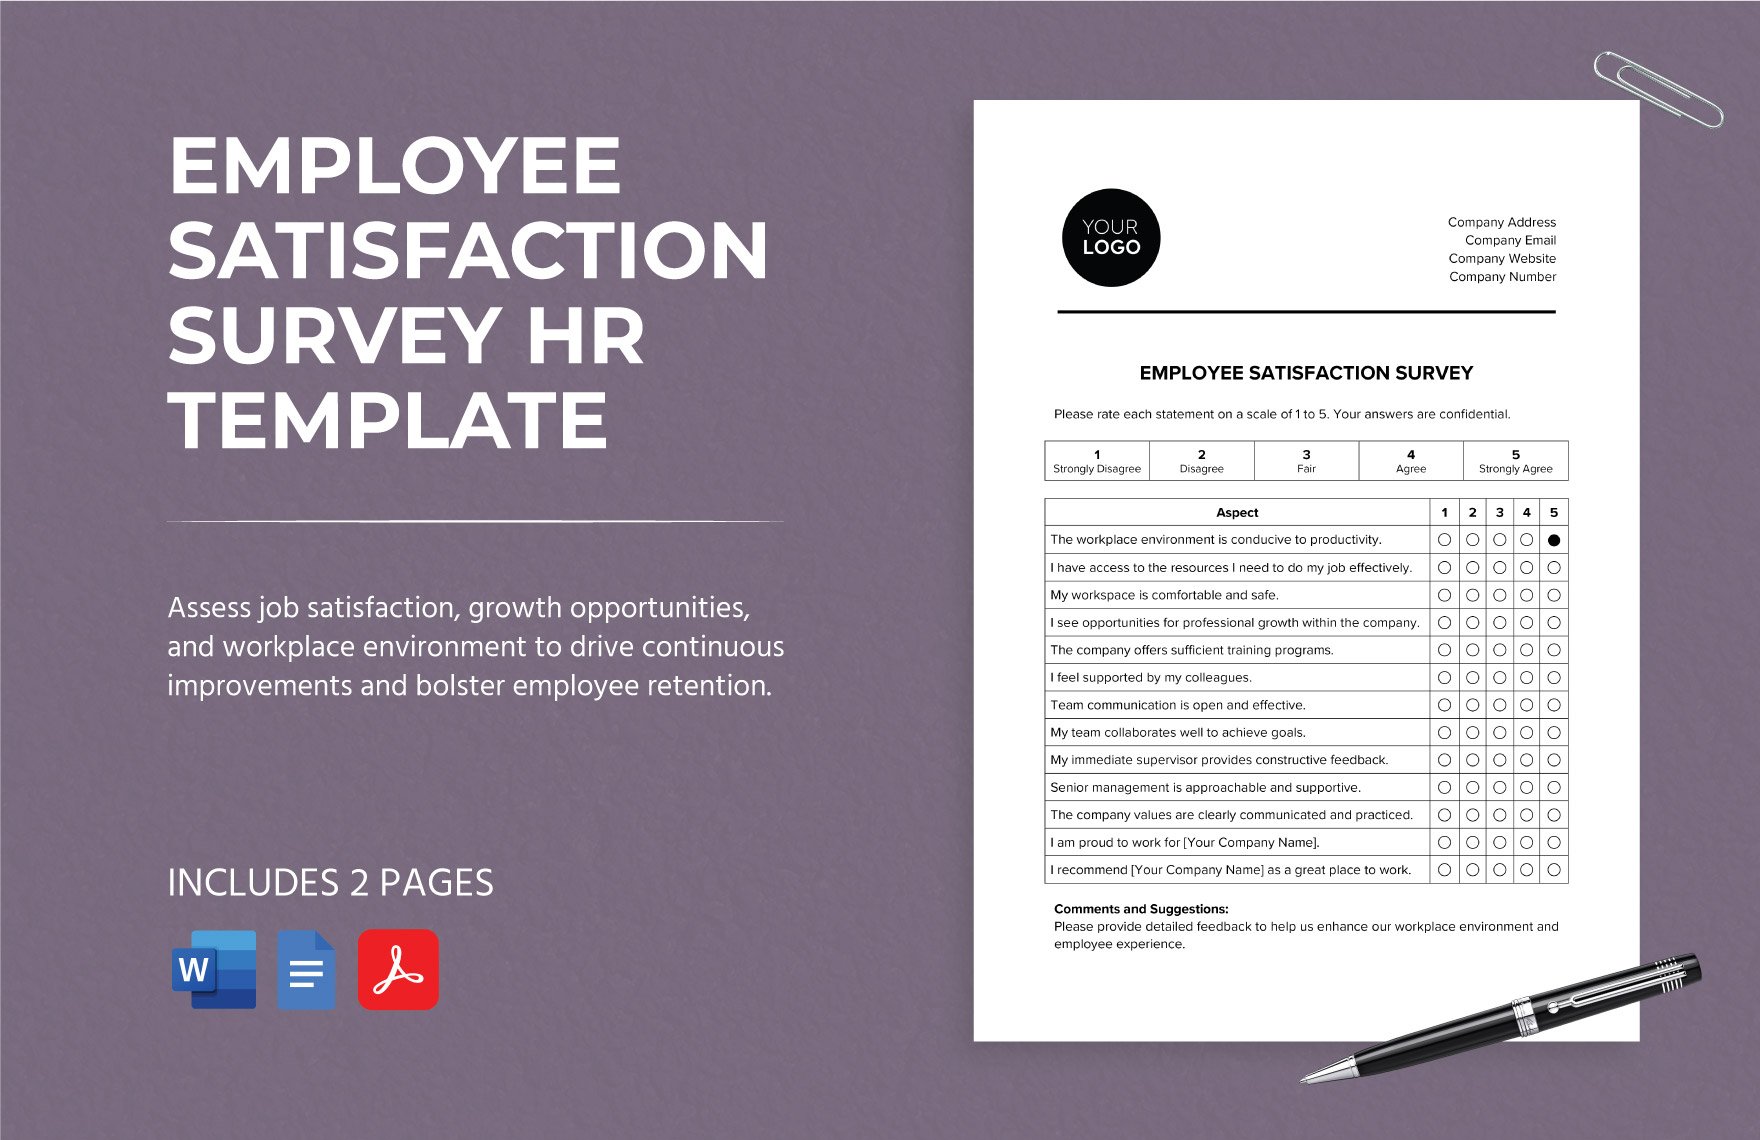 Employee Satisfaction Survey HR Template